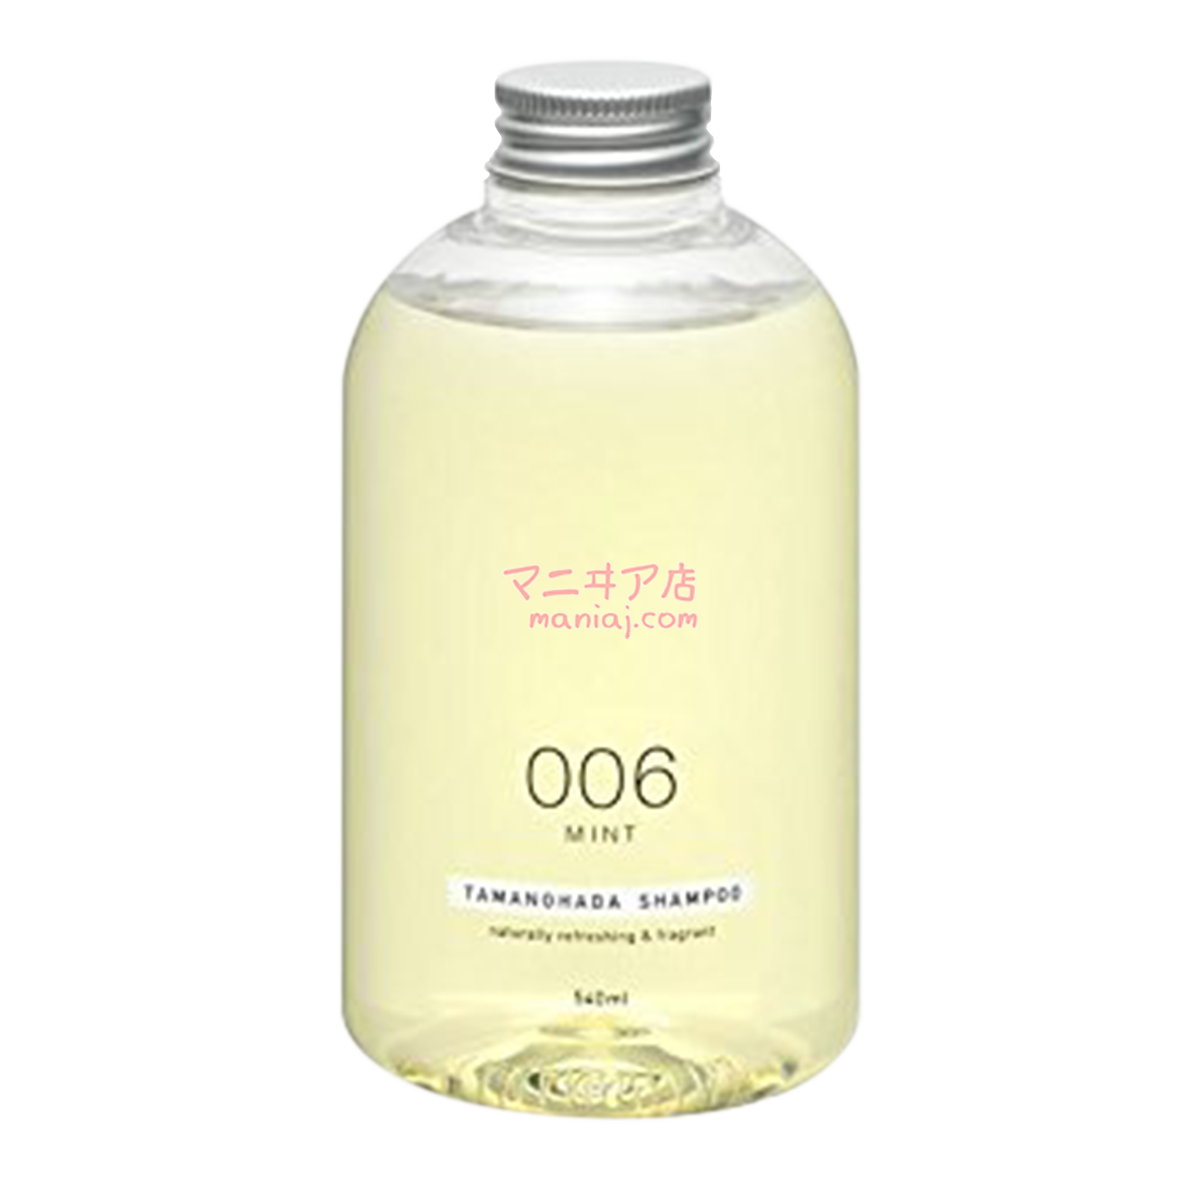 TAMANOHADA (玉の肉) Hair Wash - Mint Flavor 006